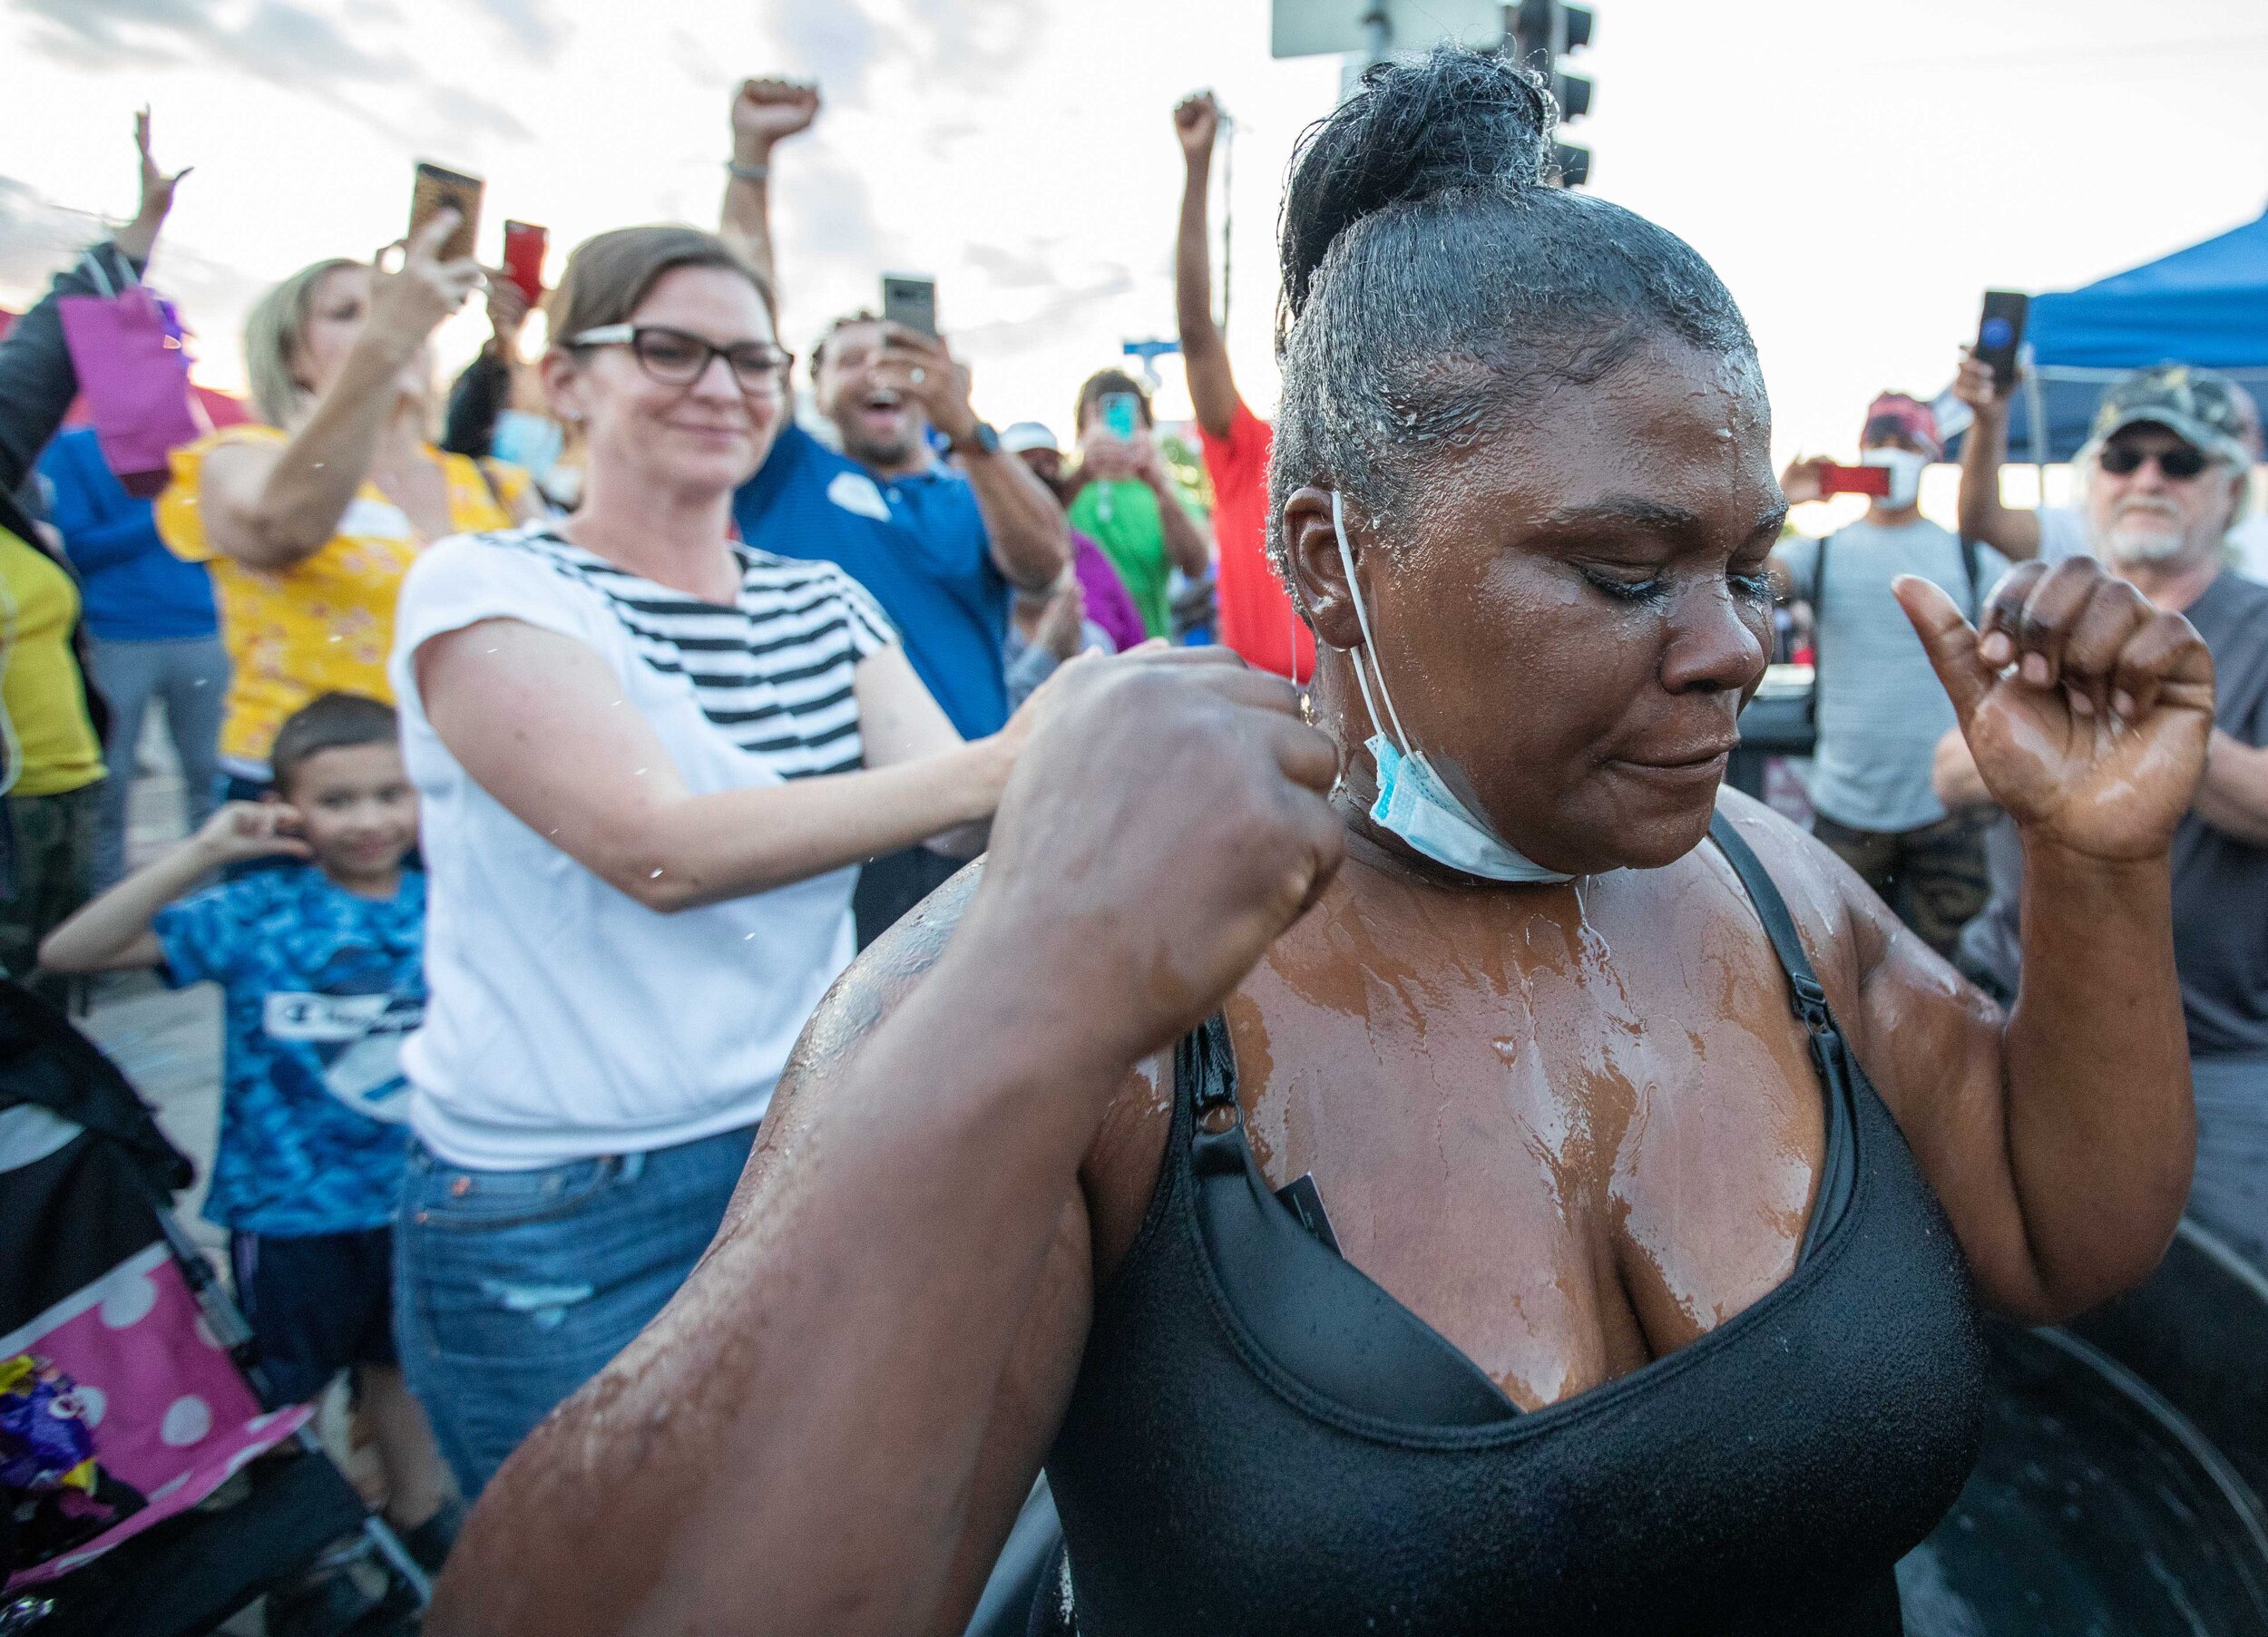  After being baptised a women pauses as community memebers cheer behind her at the George Floyd memorial in Minneapolis, Minnesota on Jun 13, 2020., 2020. 